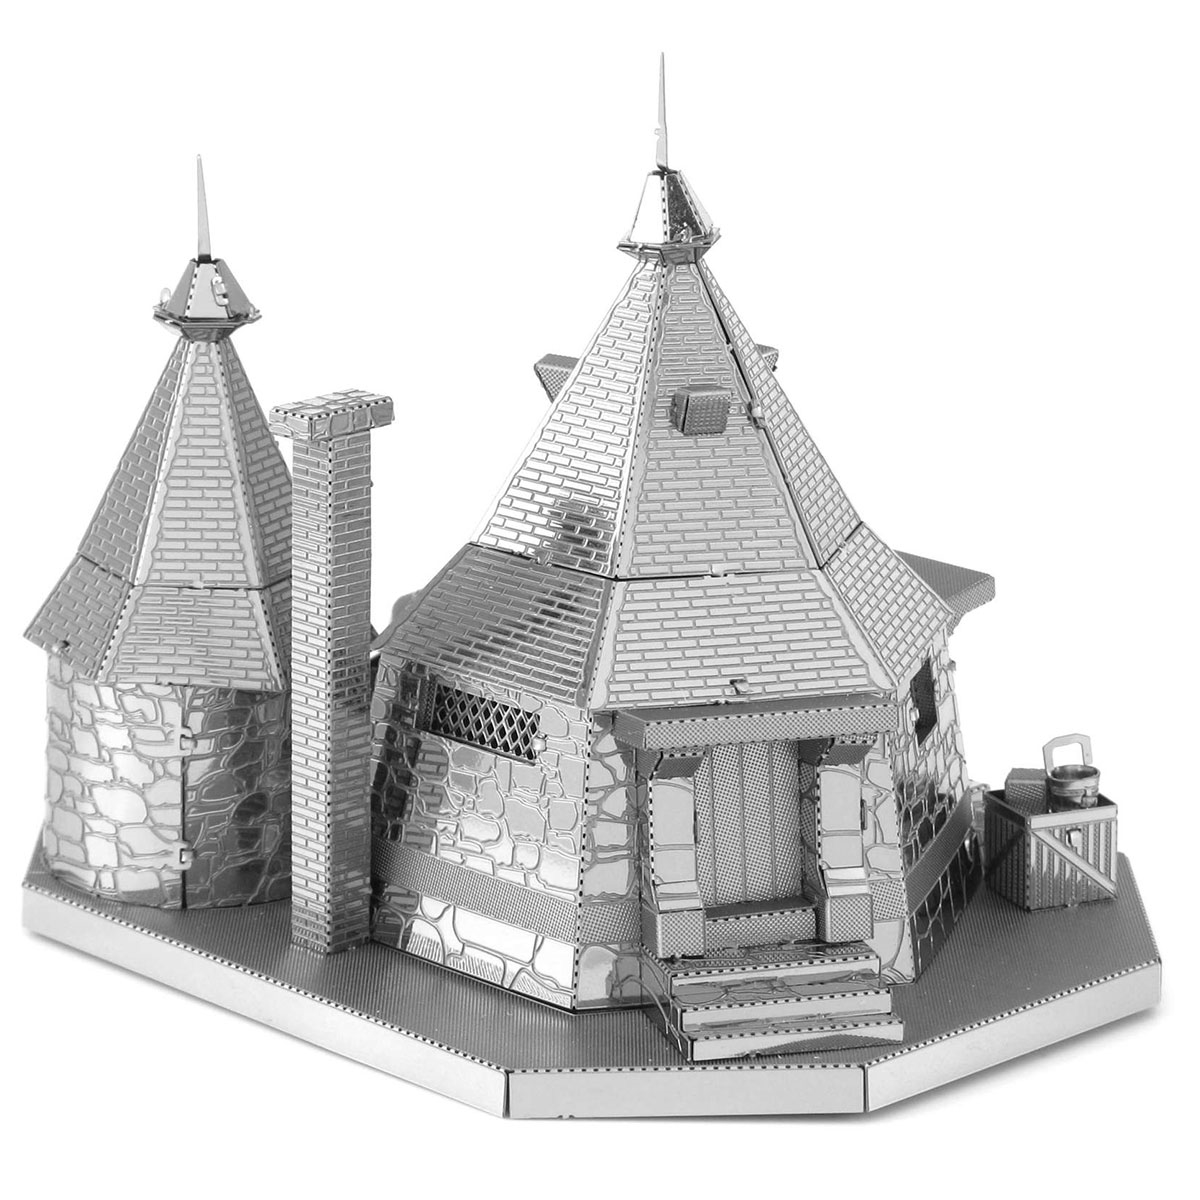 Rubeus Hagrids Hut 3D Puzzle Model Build Your Own Metal Earth Harry Potter 